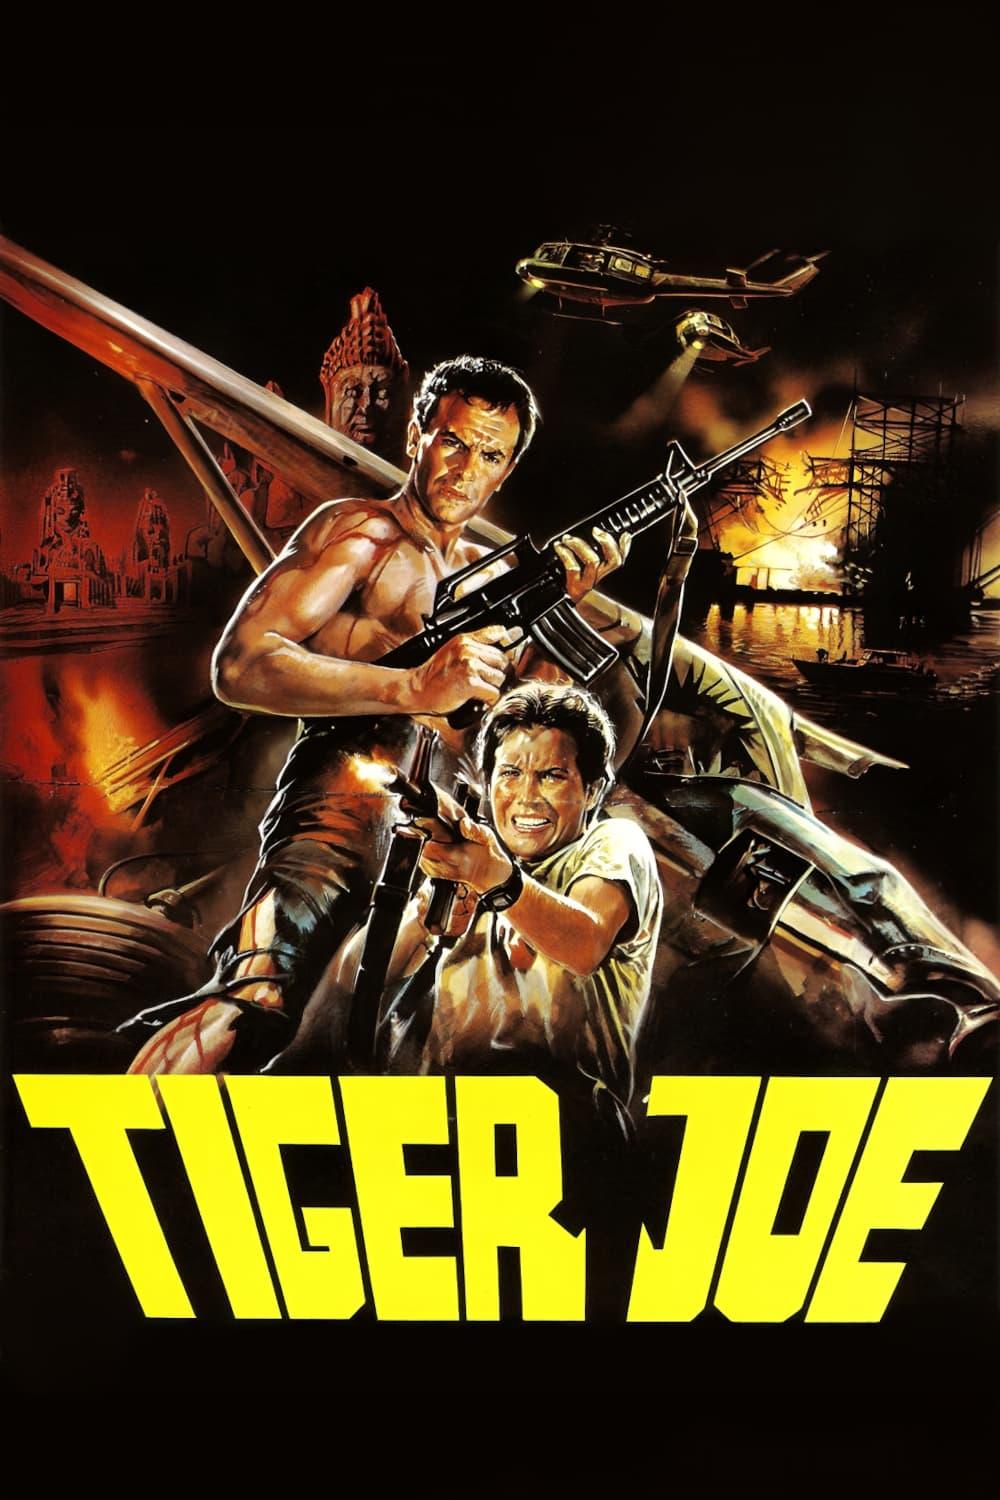 Tiger Joe poster